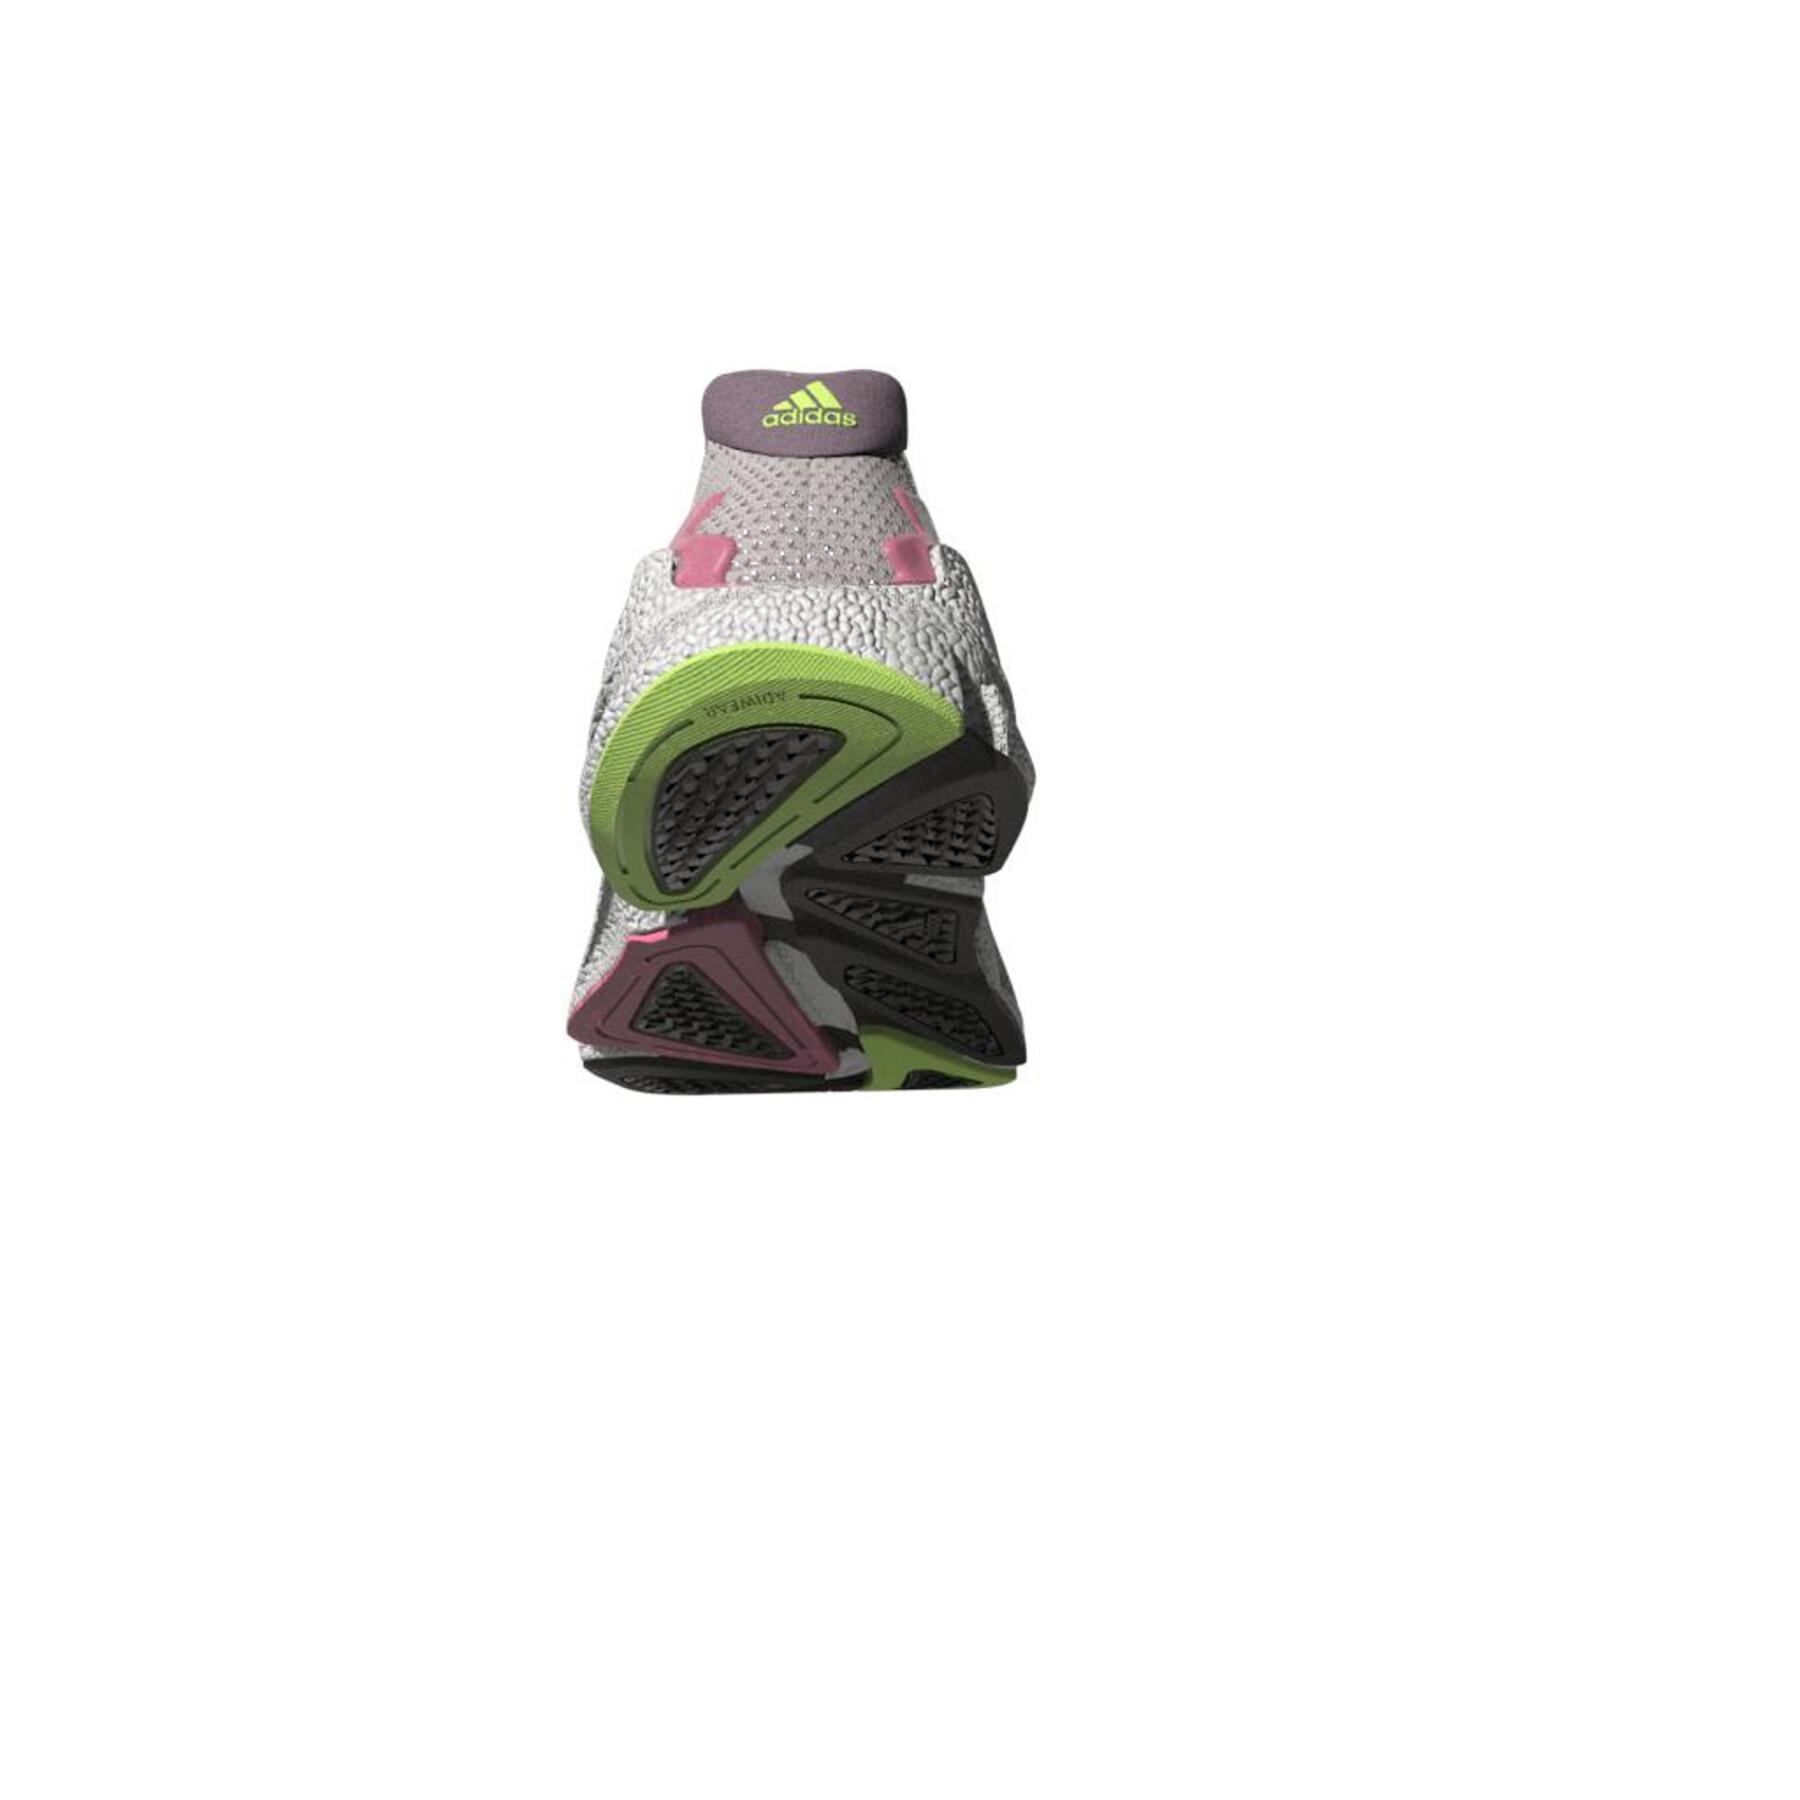 Scarpe donna adidas X9000L4